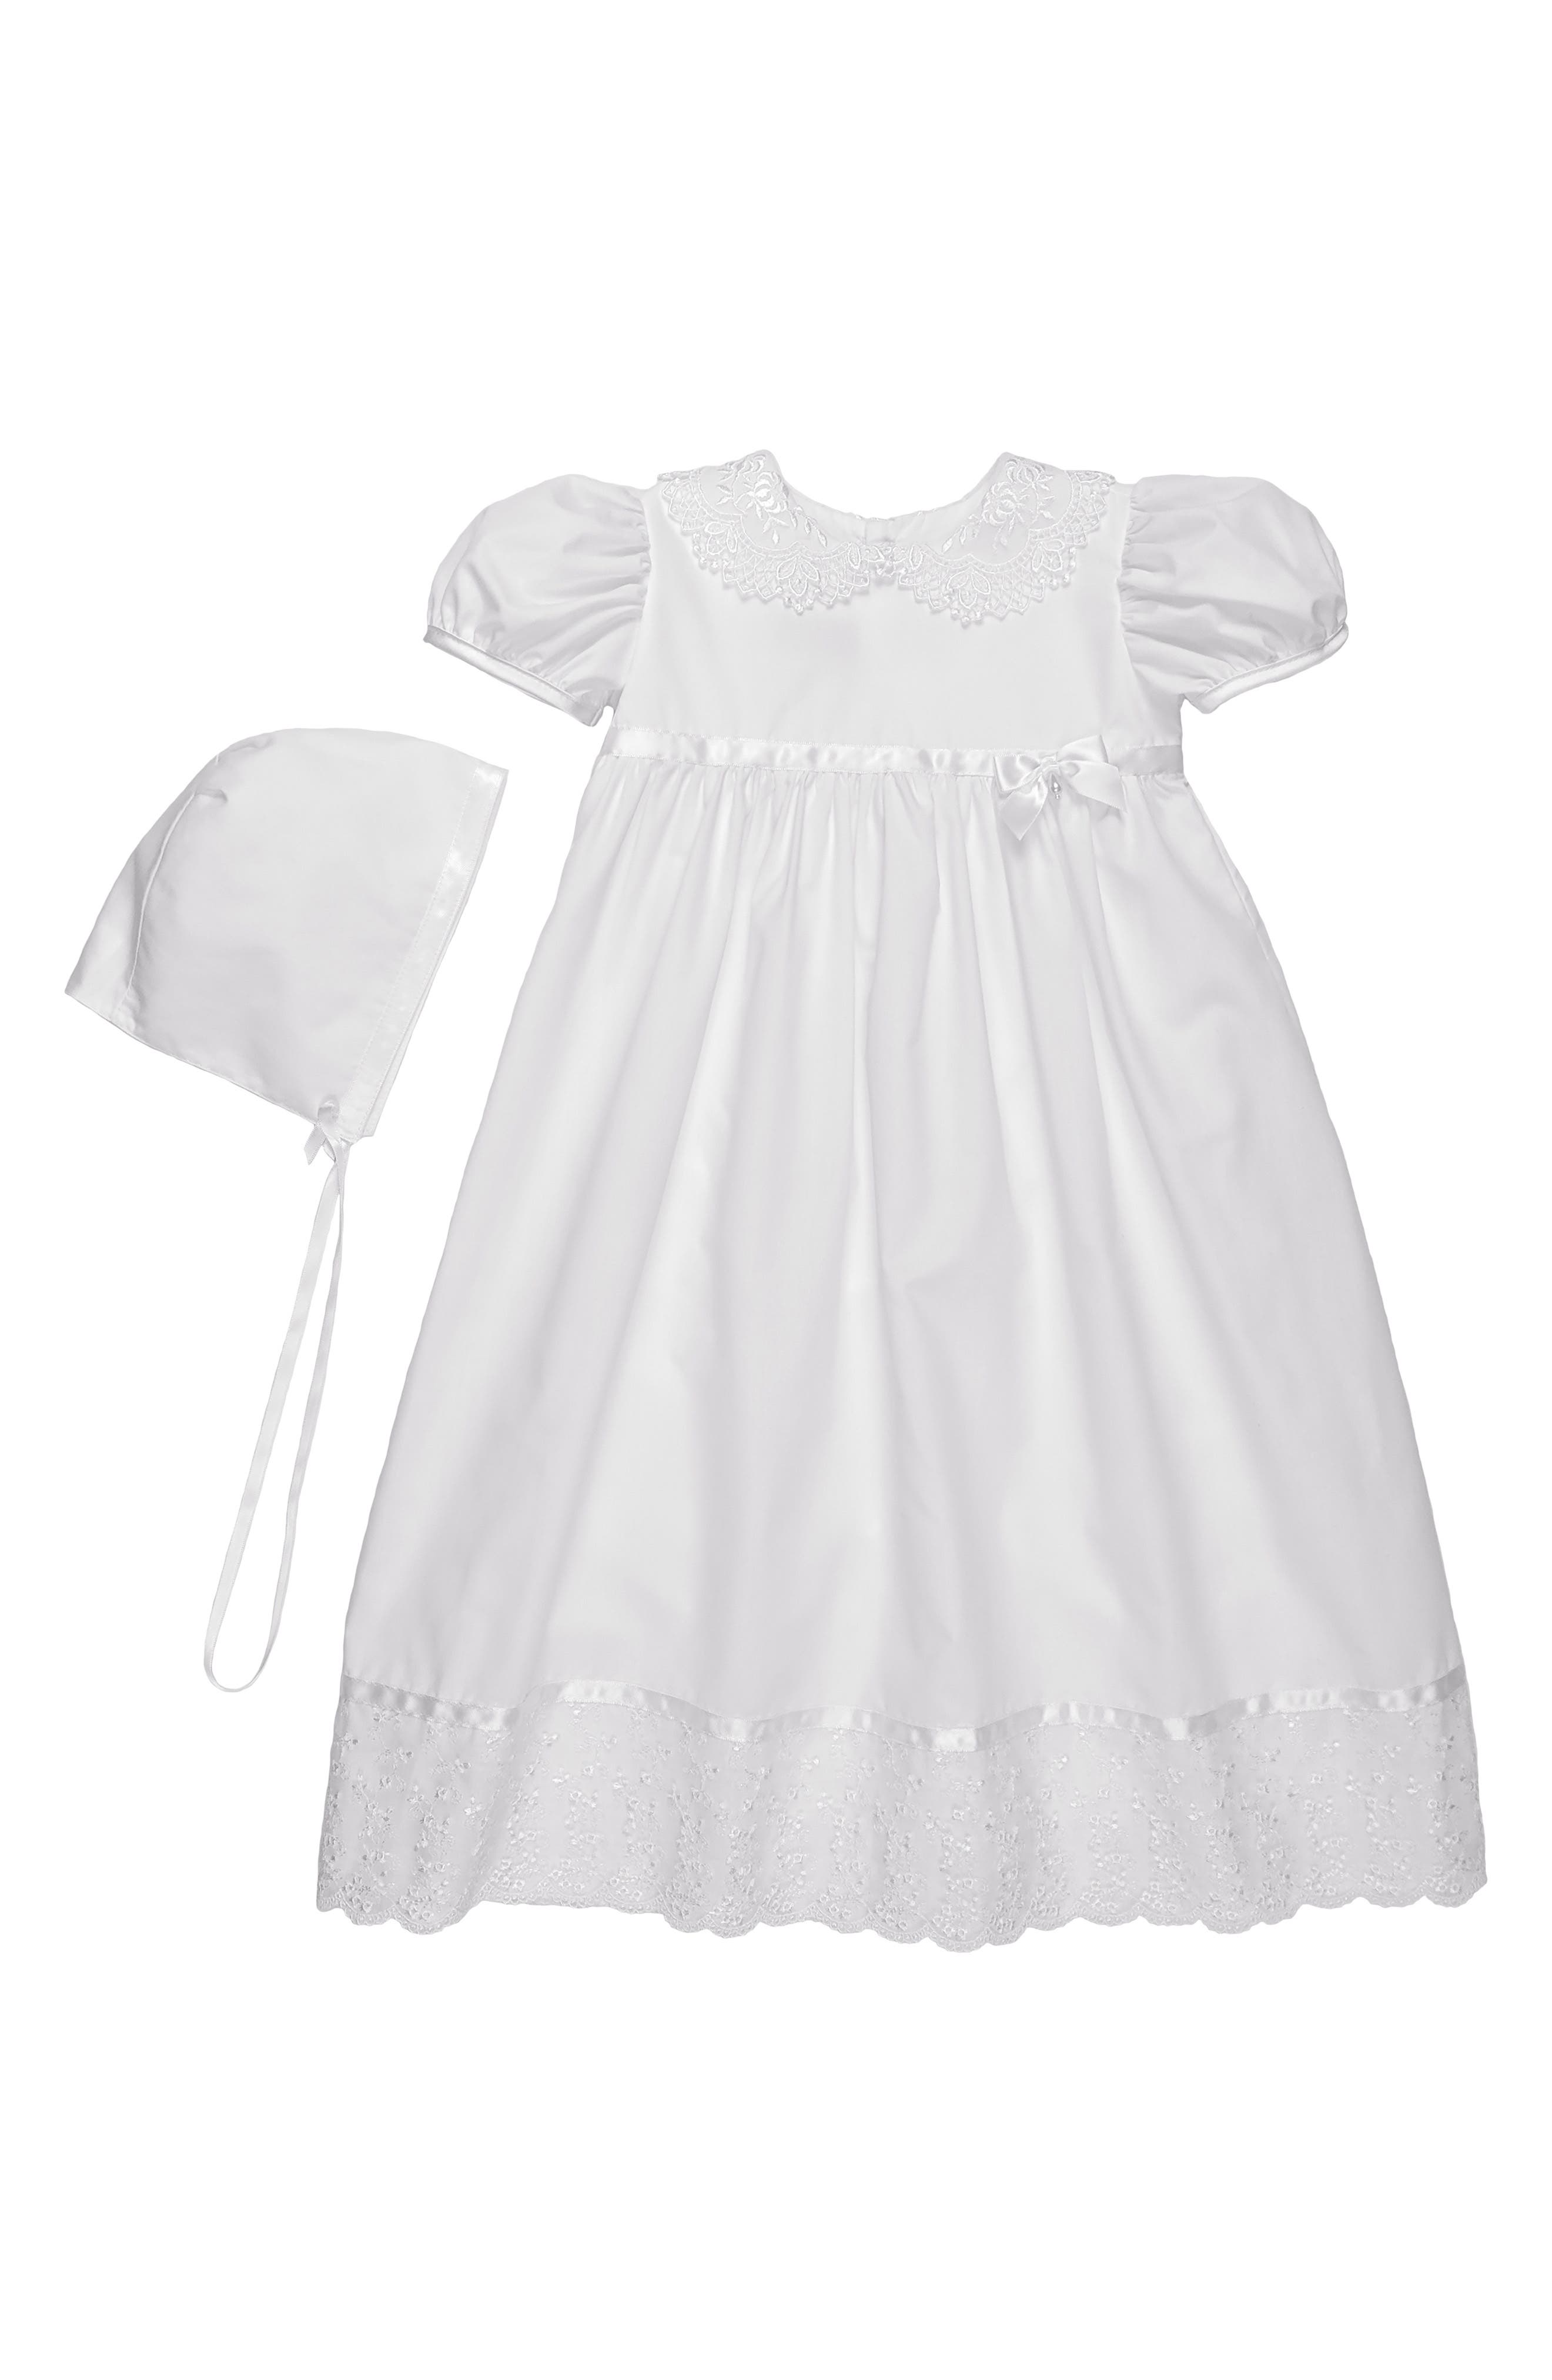 white dress for baby boy baptism